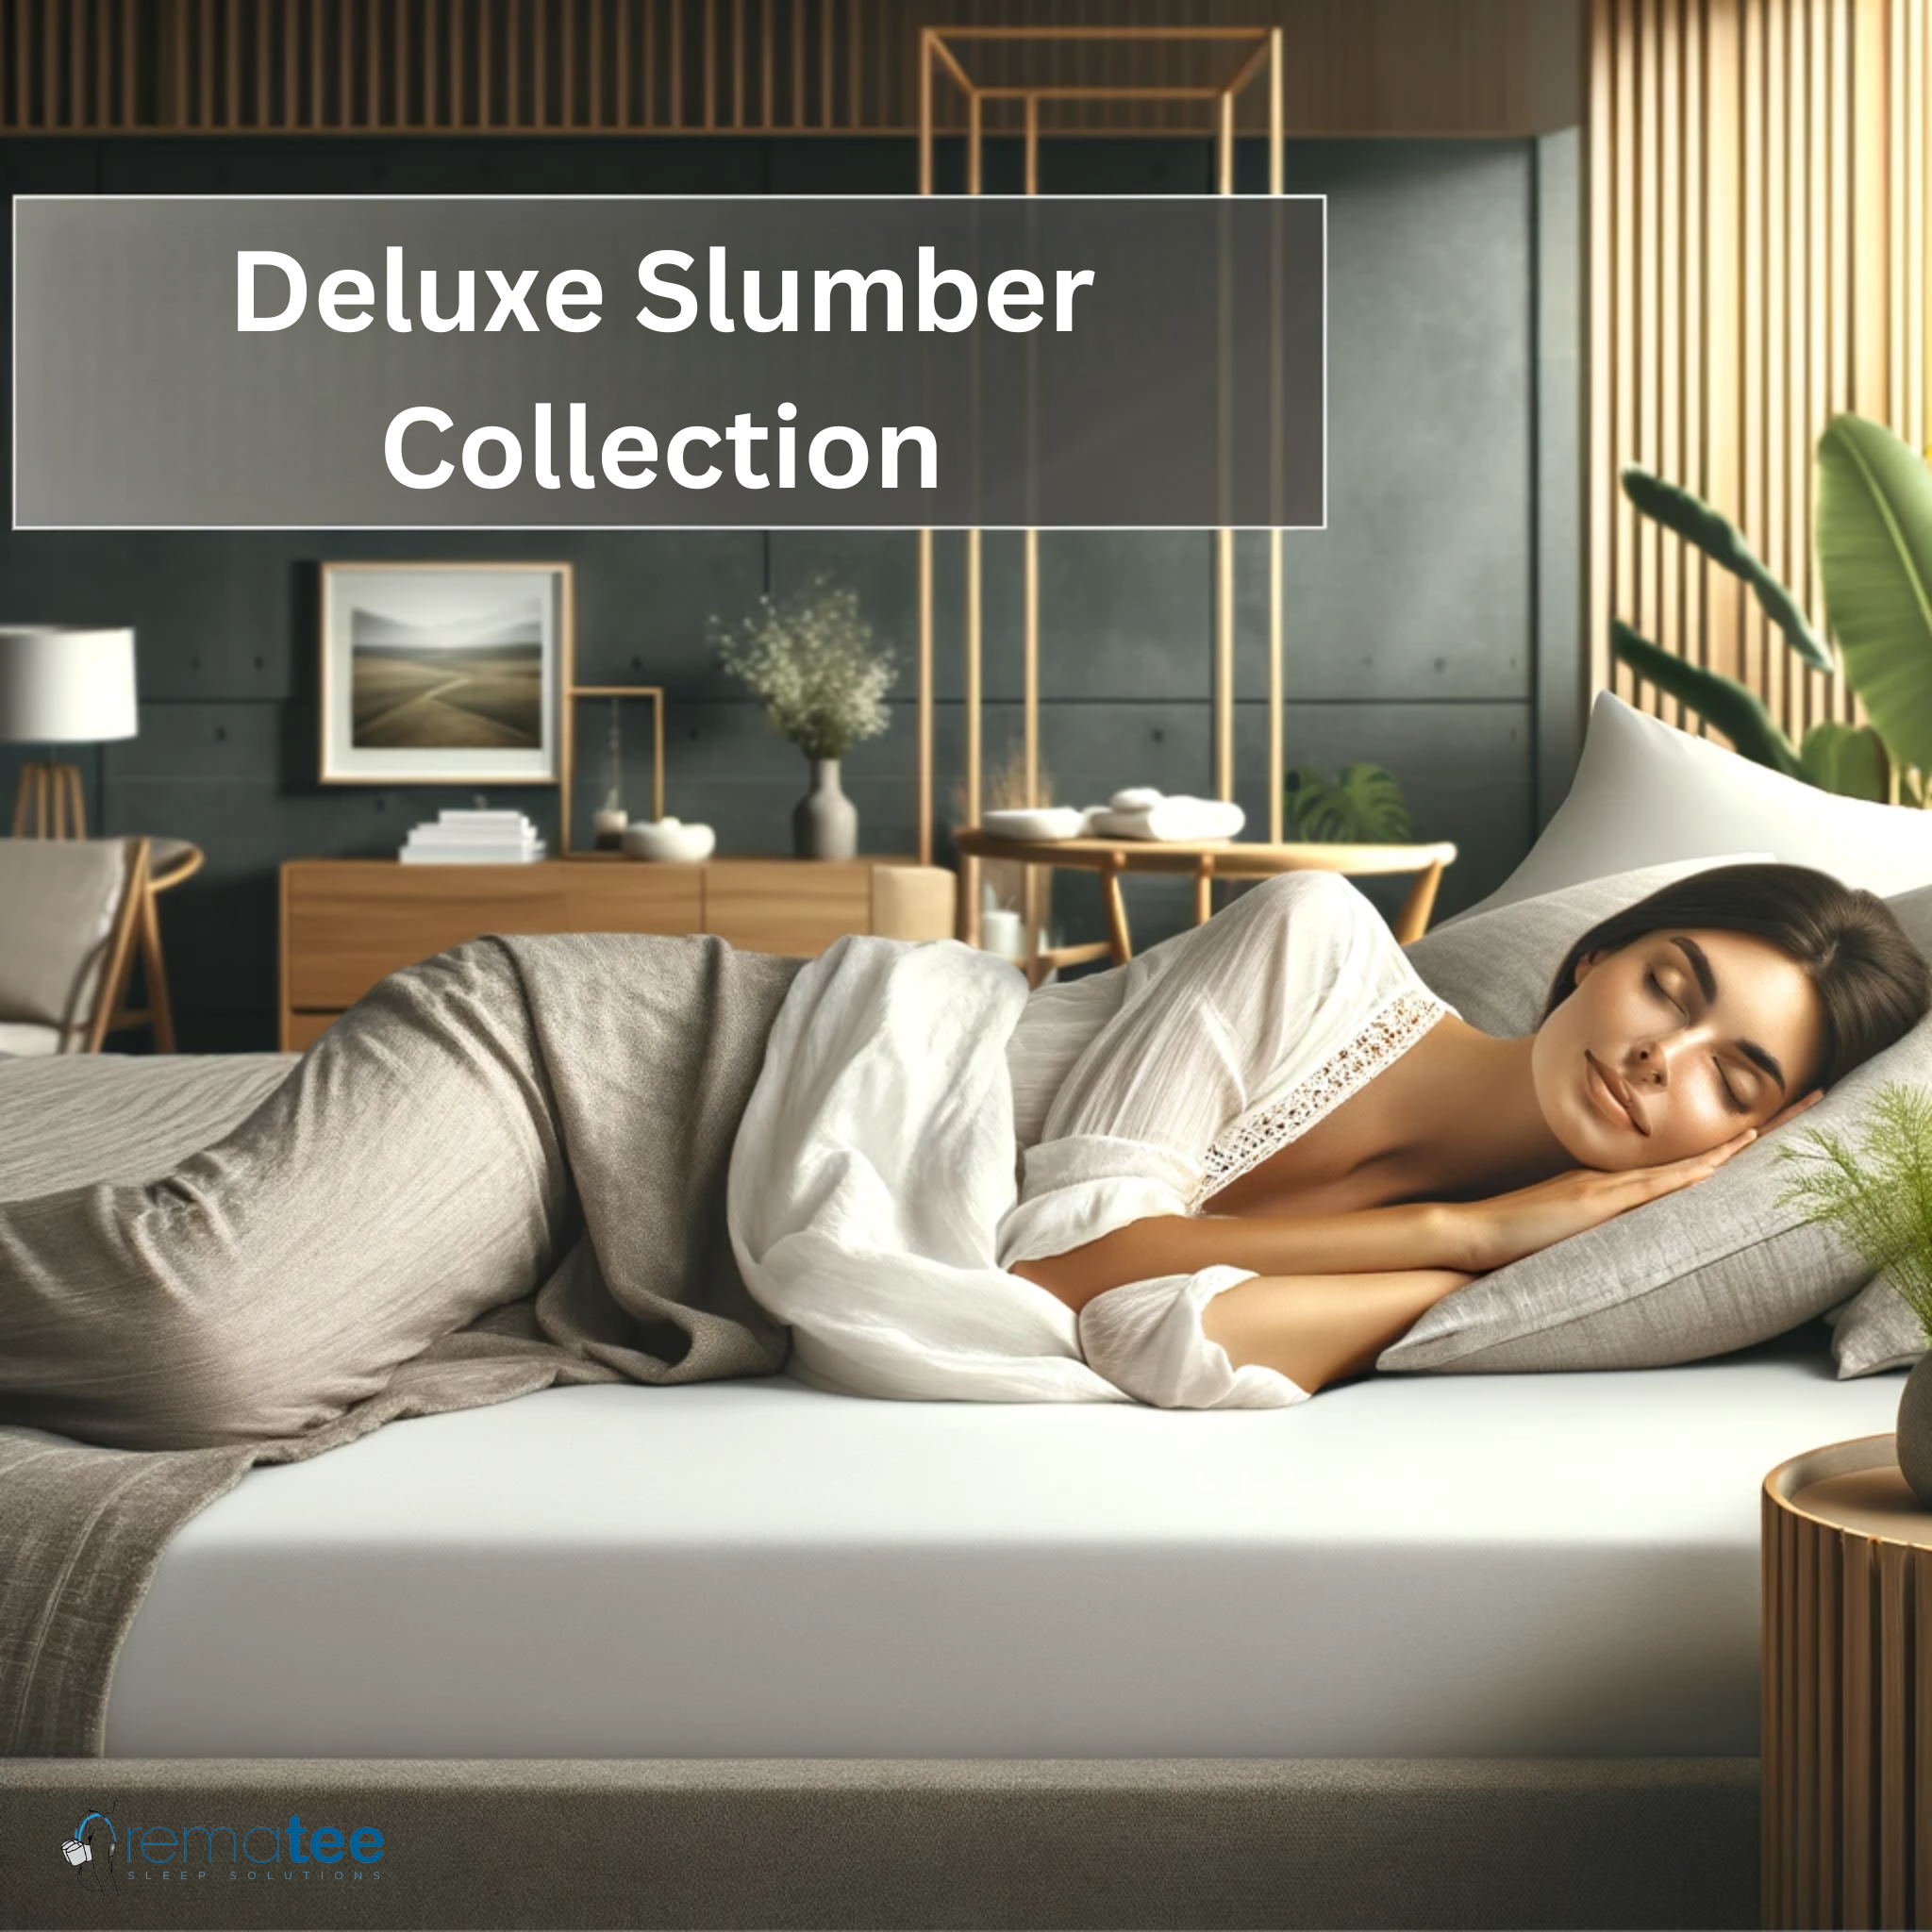 Deluxe Slumber Collection